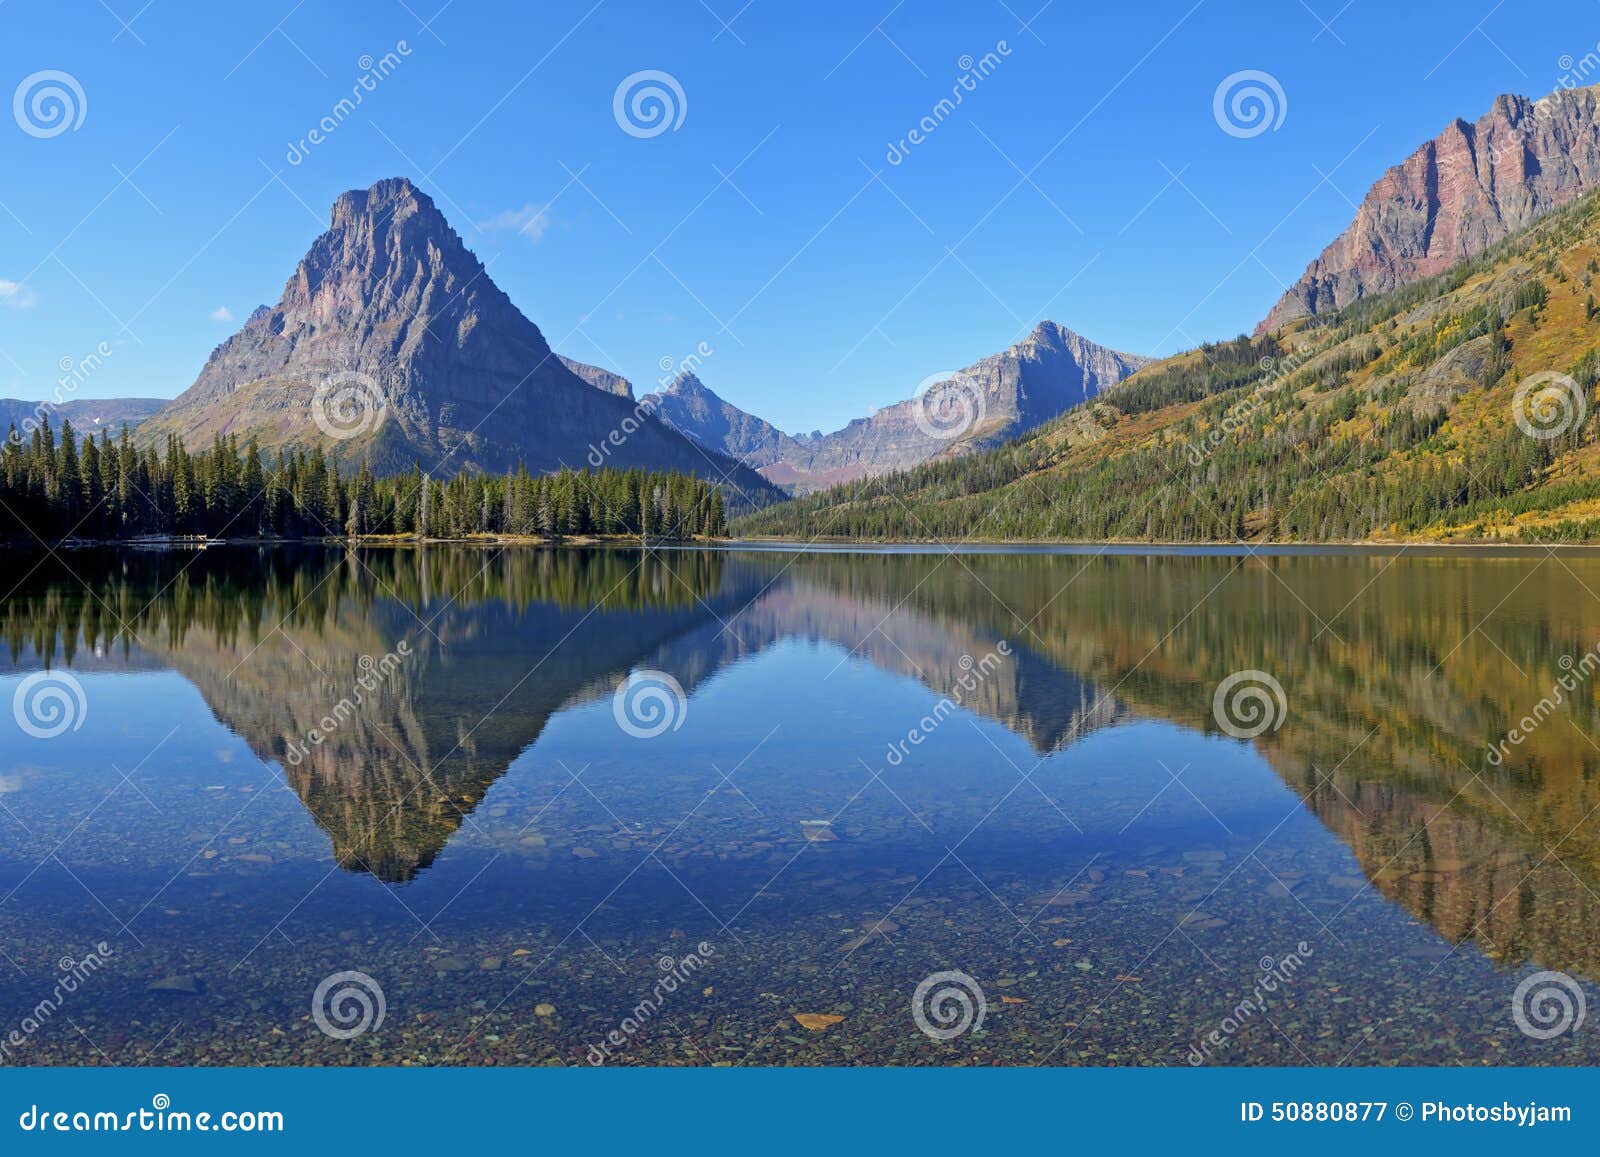 two medicine lake, glacier national park